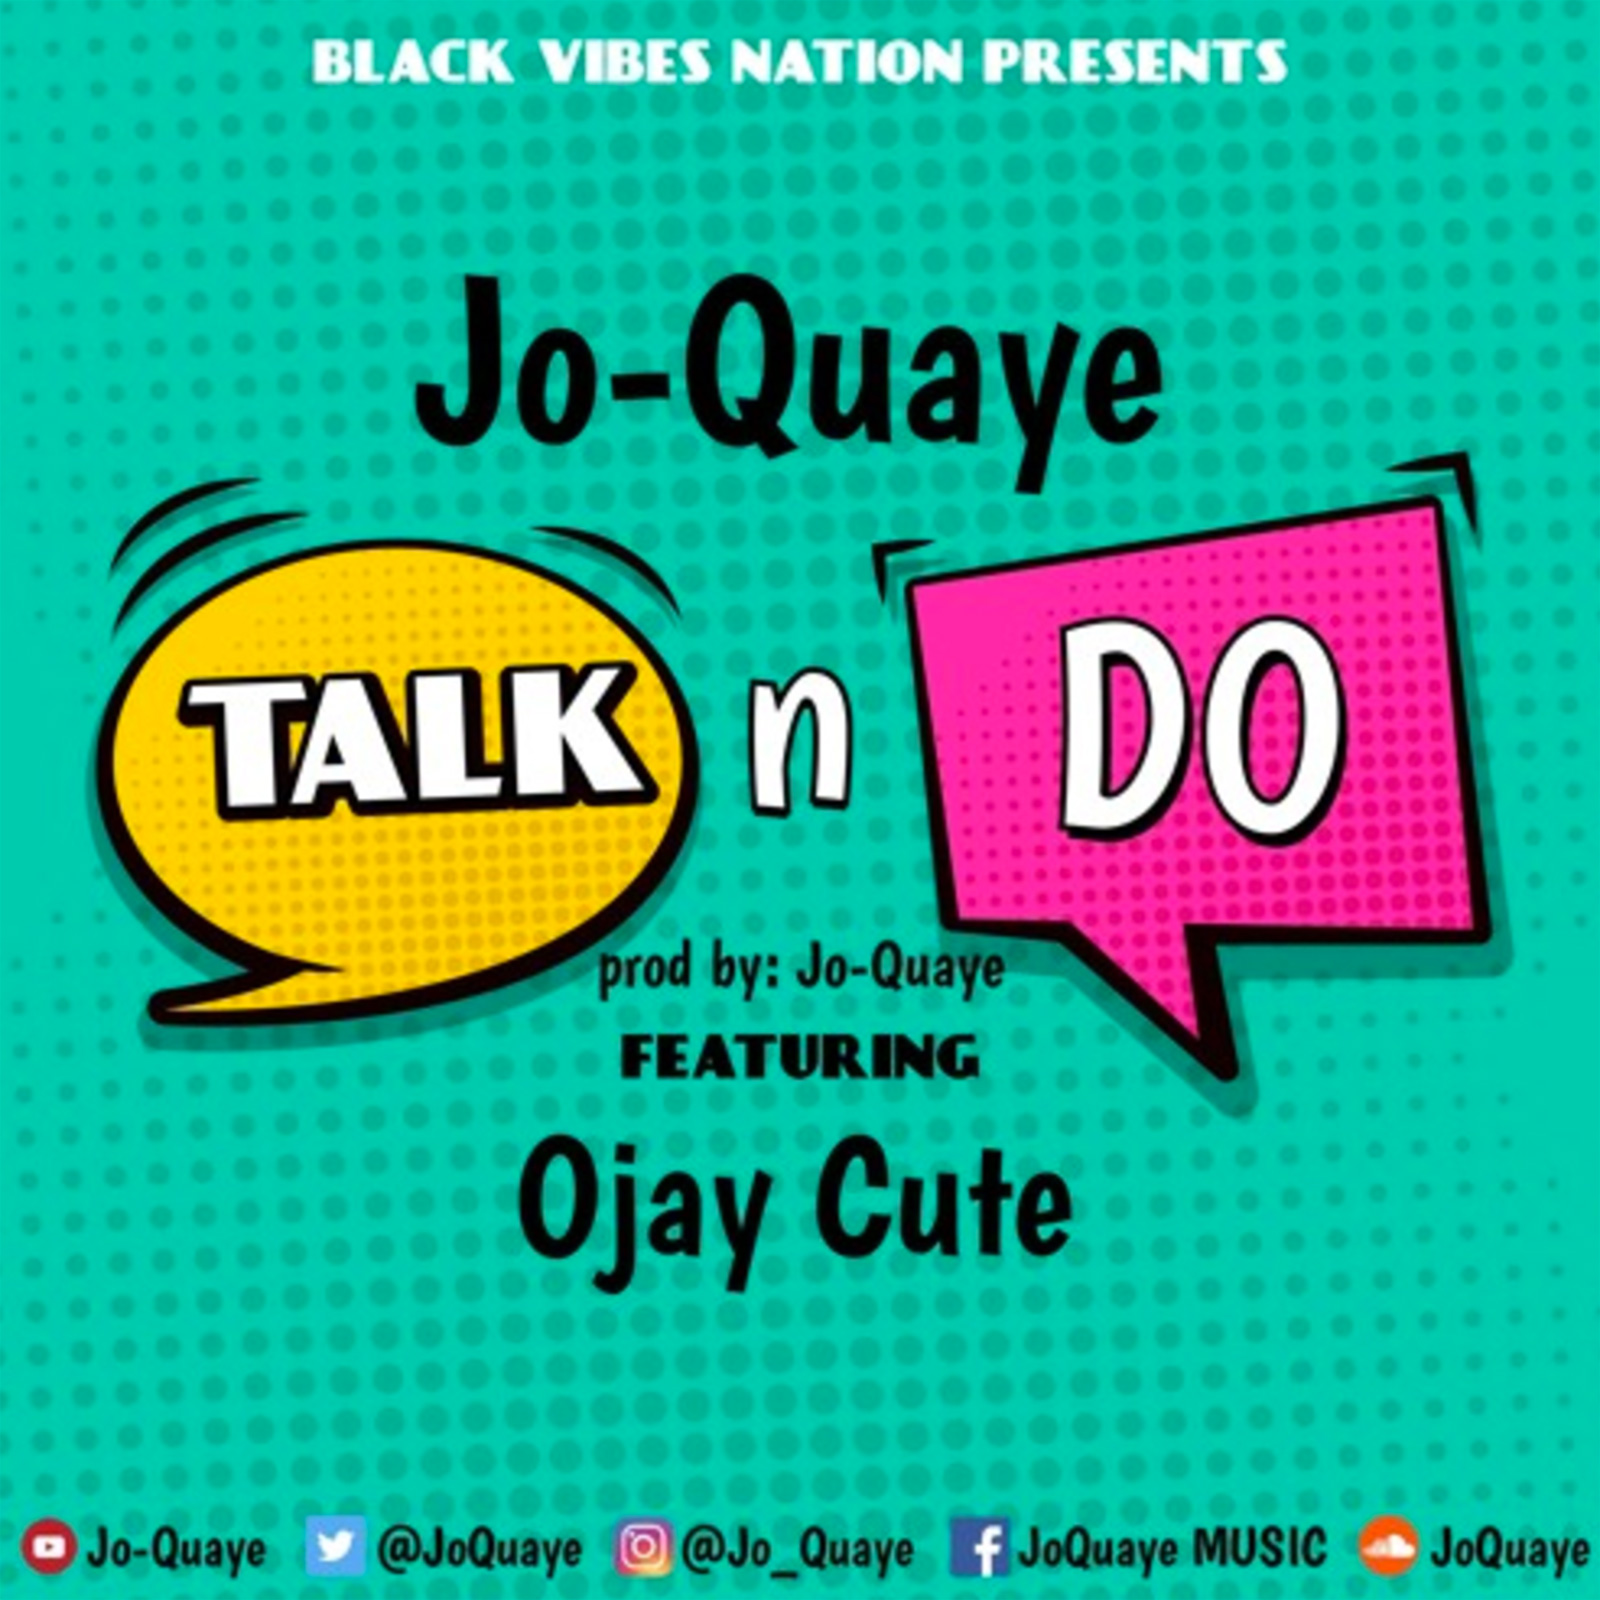 Talk N Do by Jo-Quaye feat. Ojay Cute